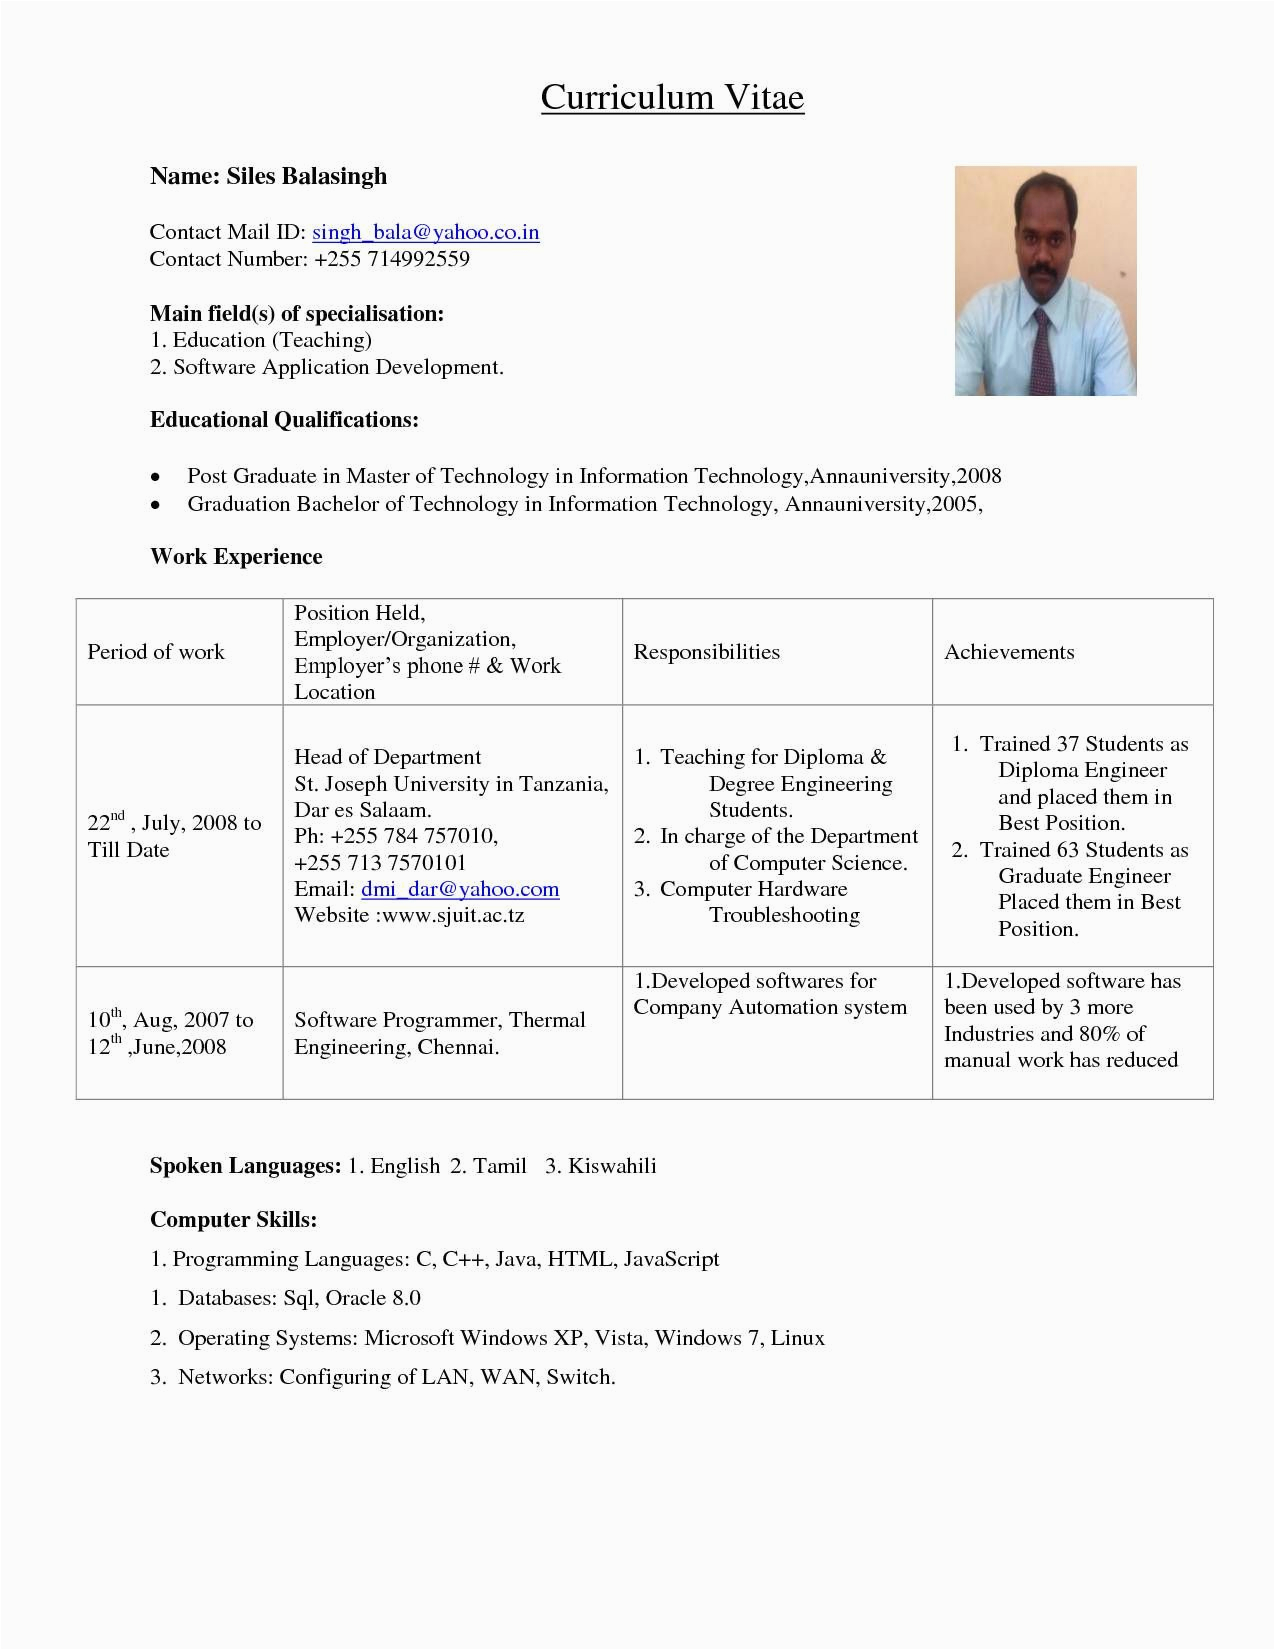 Sample Resume for assistant Professor In Engineering College for Experienced Resume Sample University Professor Restume